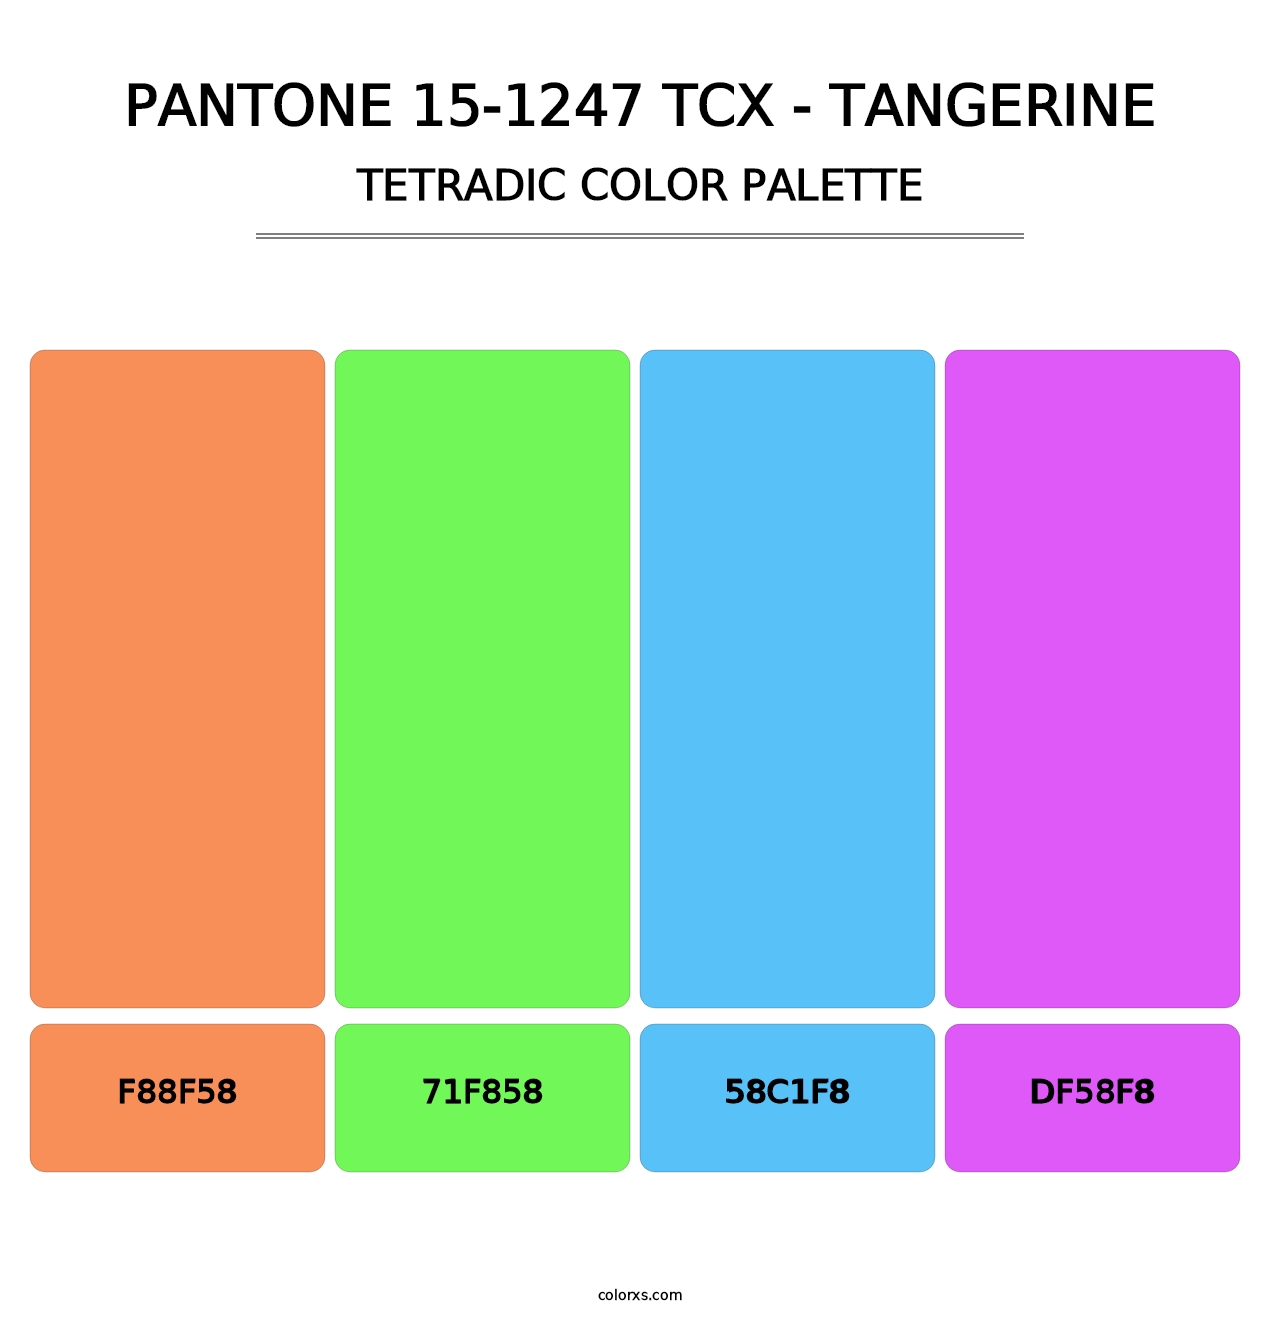 PANTONE 15-1247 TCX - Tangerine - Tetradic Color Palette